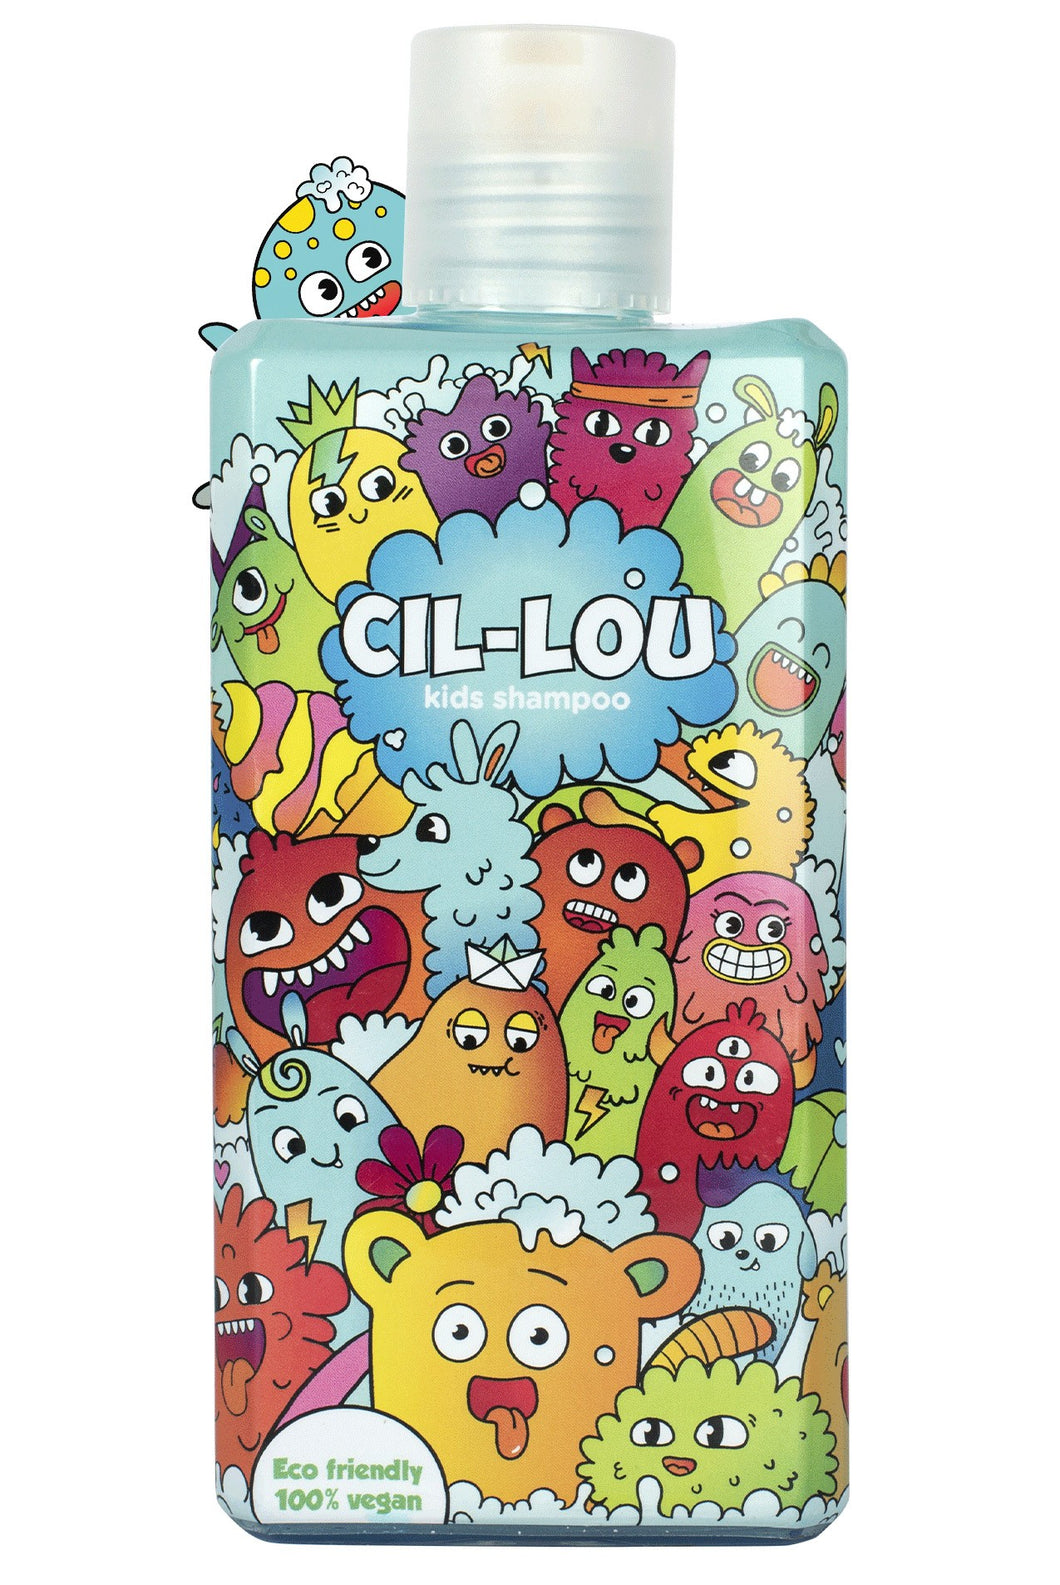 Cil-Lou - Kids shampoo - Octo -20%